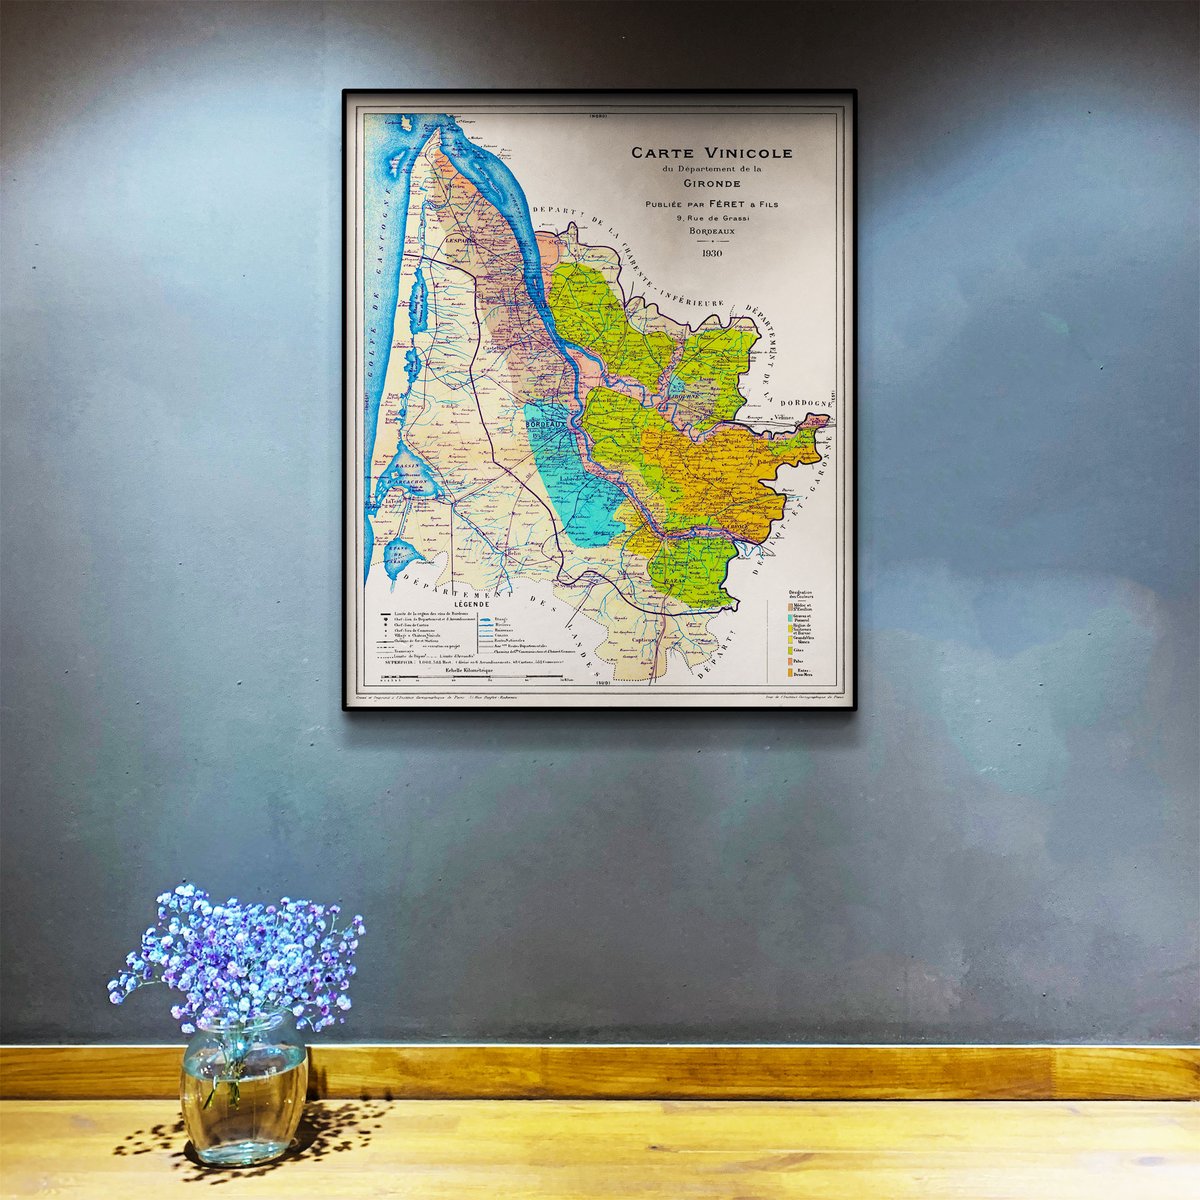 Carte vinicole du Région de la Gironde, par Féret et fils en 1930

#mapart #map #maps #cartography #art #mapping 
#travel #geography #interiordesign #wallart 
#homedecor #giftideas #gis #design #citymap #history 
#mapa #illustration #artwork #cartographyart 
#mapstagram